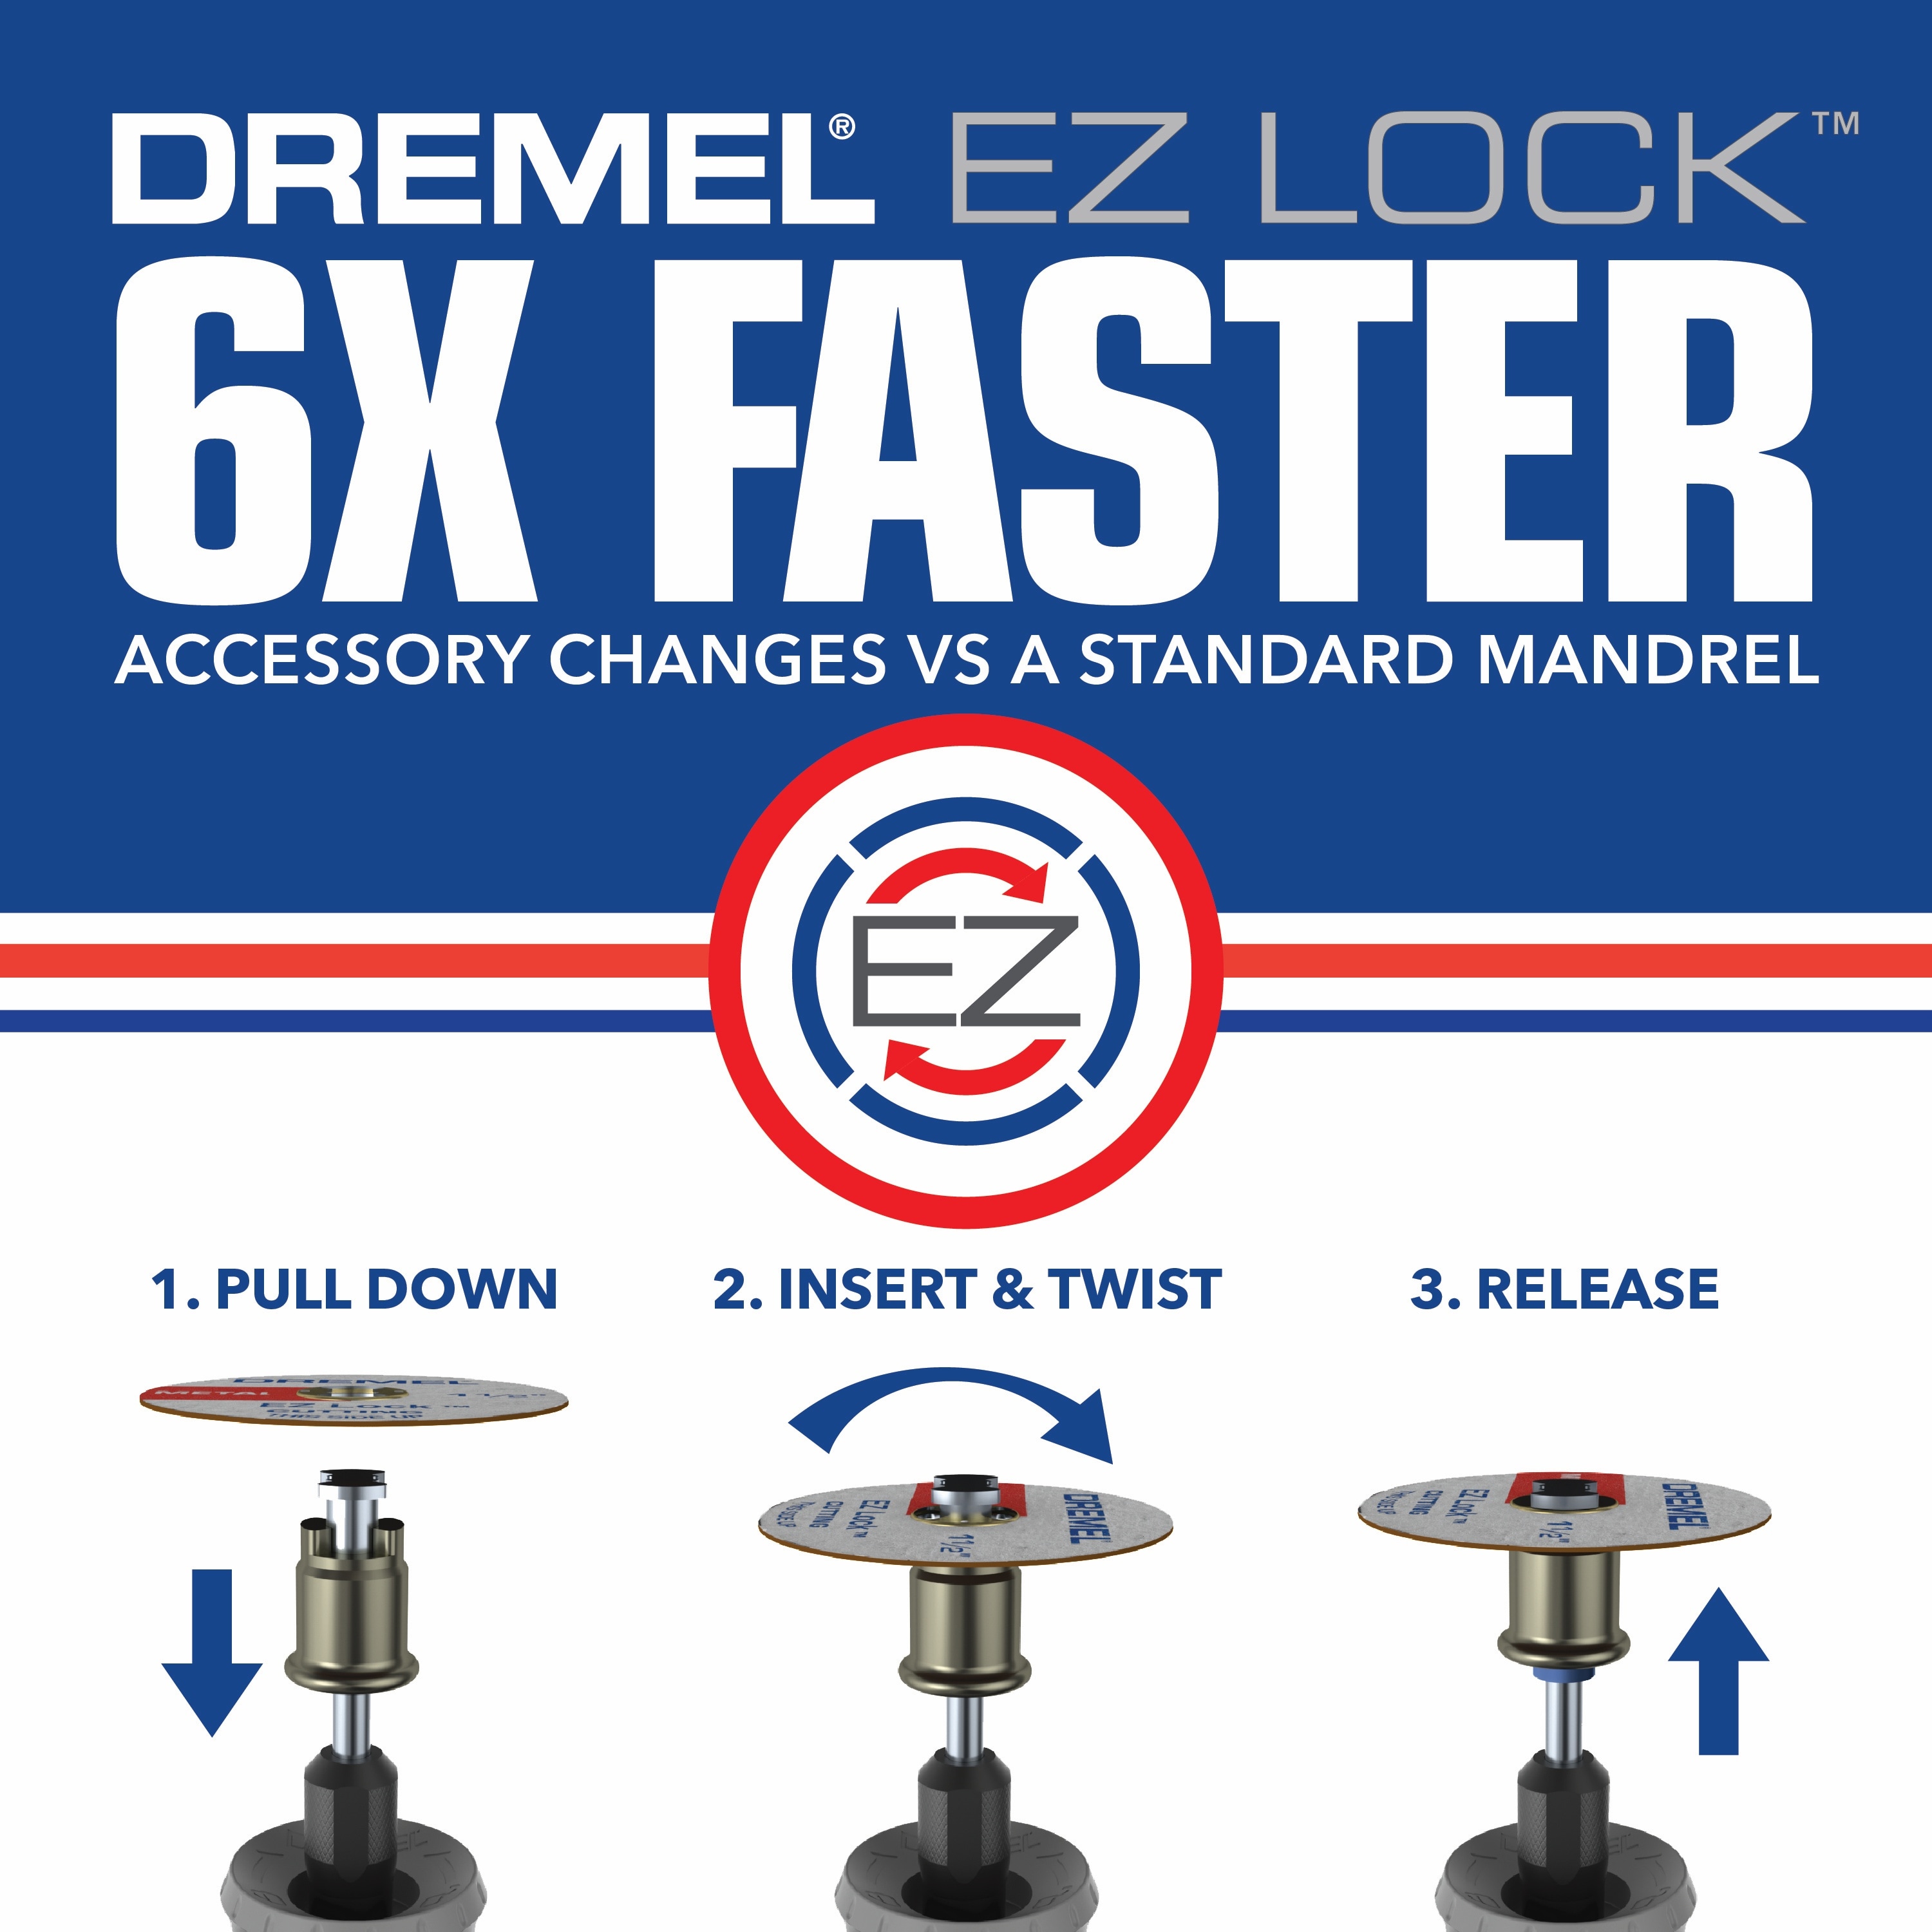 Dremel 4300 Series 1.8 Amp Variable Speed Corded Rotary Tool Kit